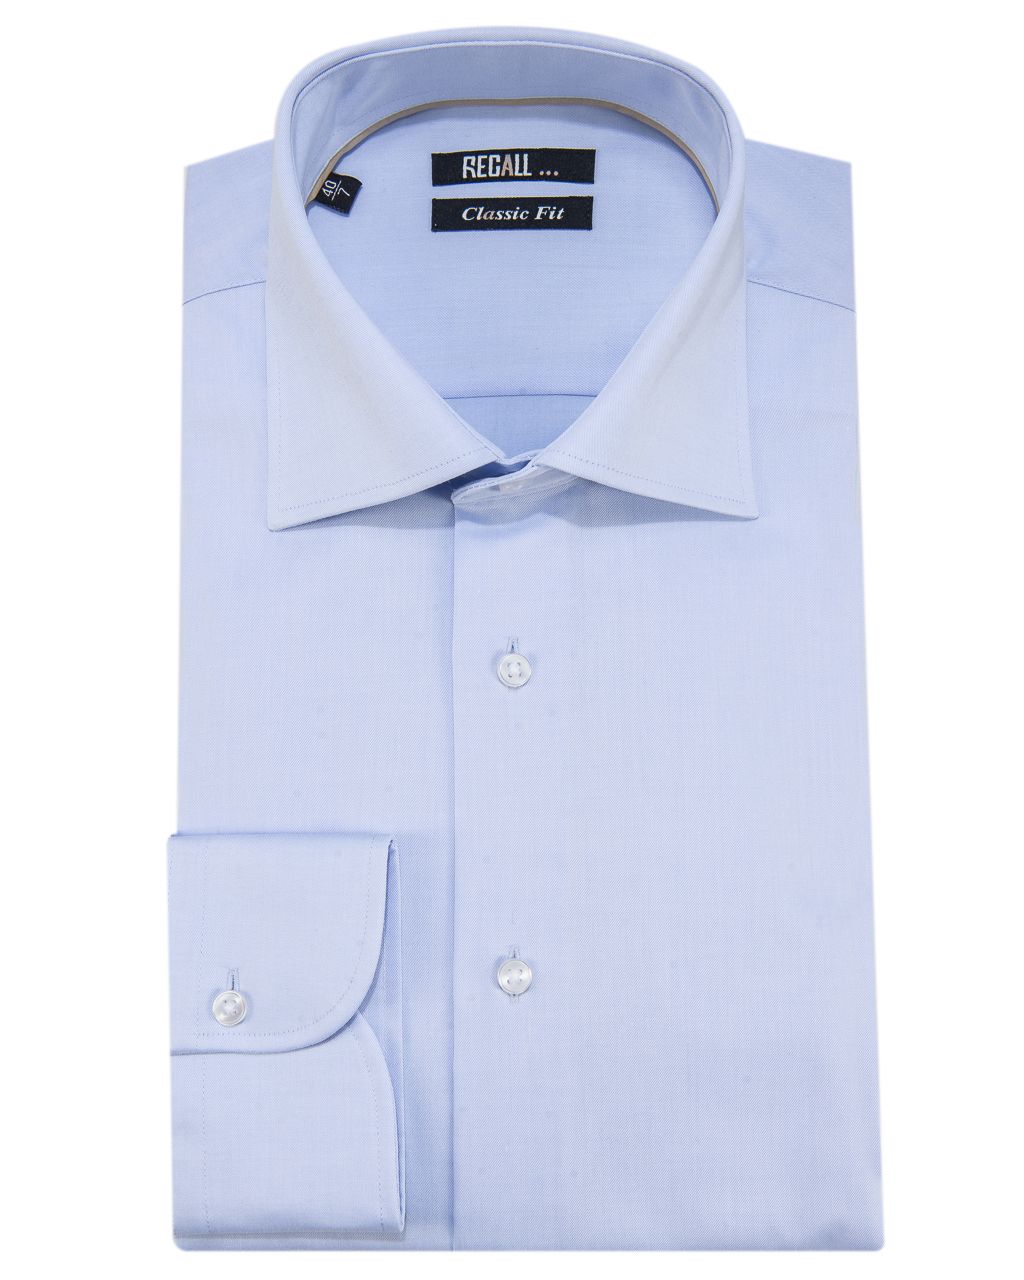 Recall Classic fit Overhemd Extra lange mouwen Lichtblauw uni 043487-000-39